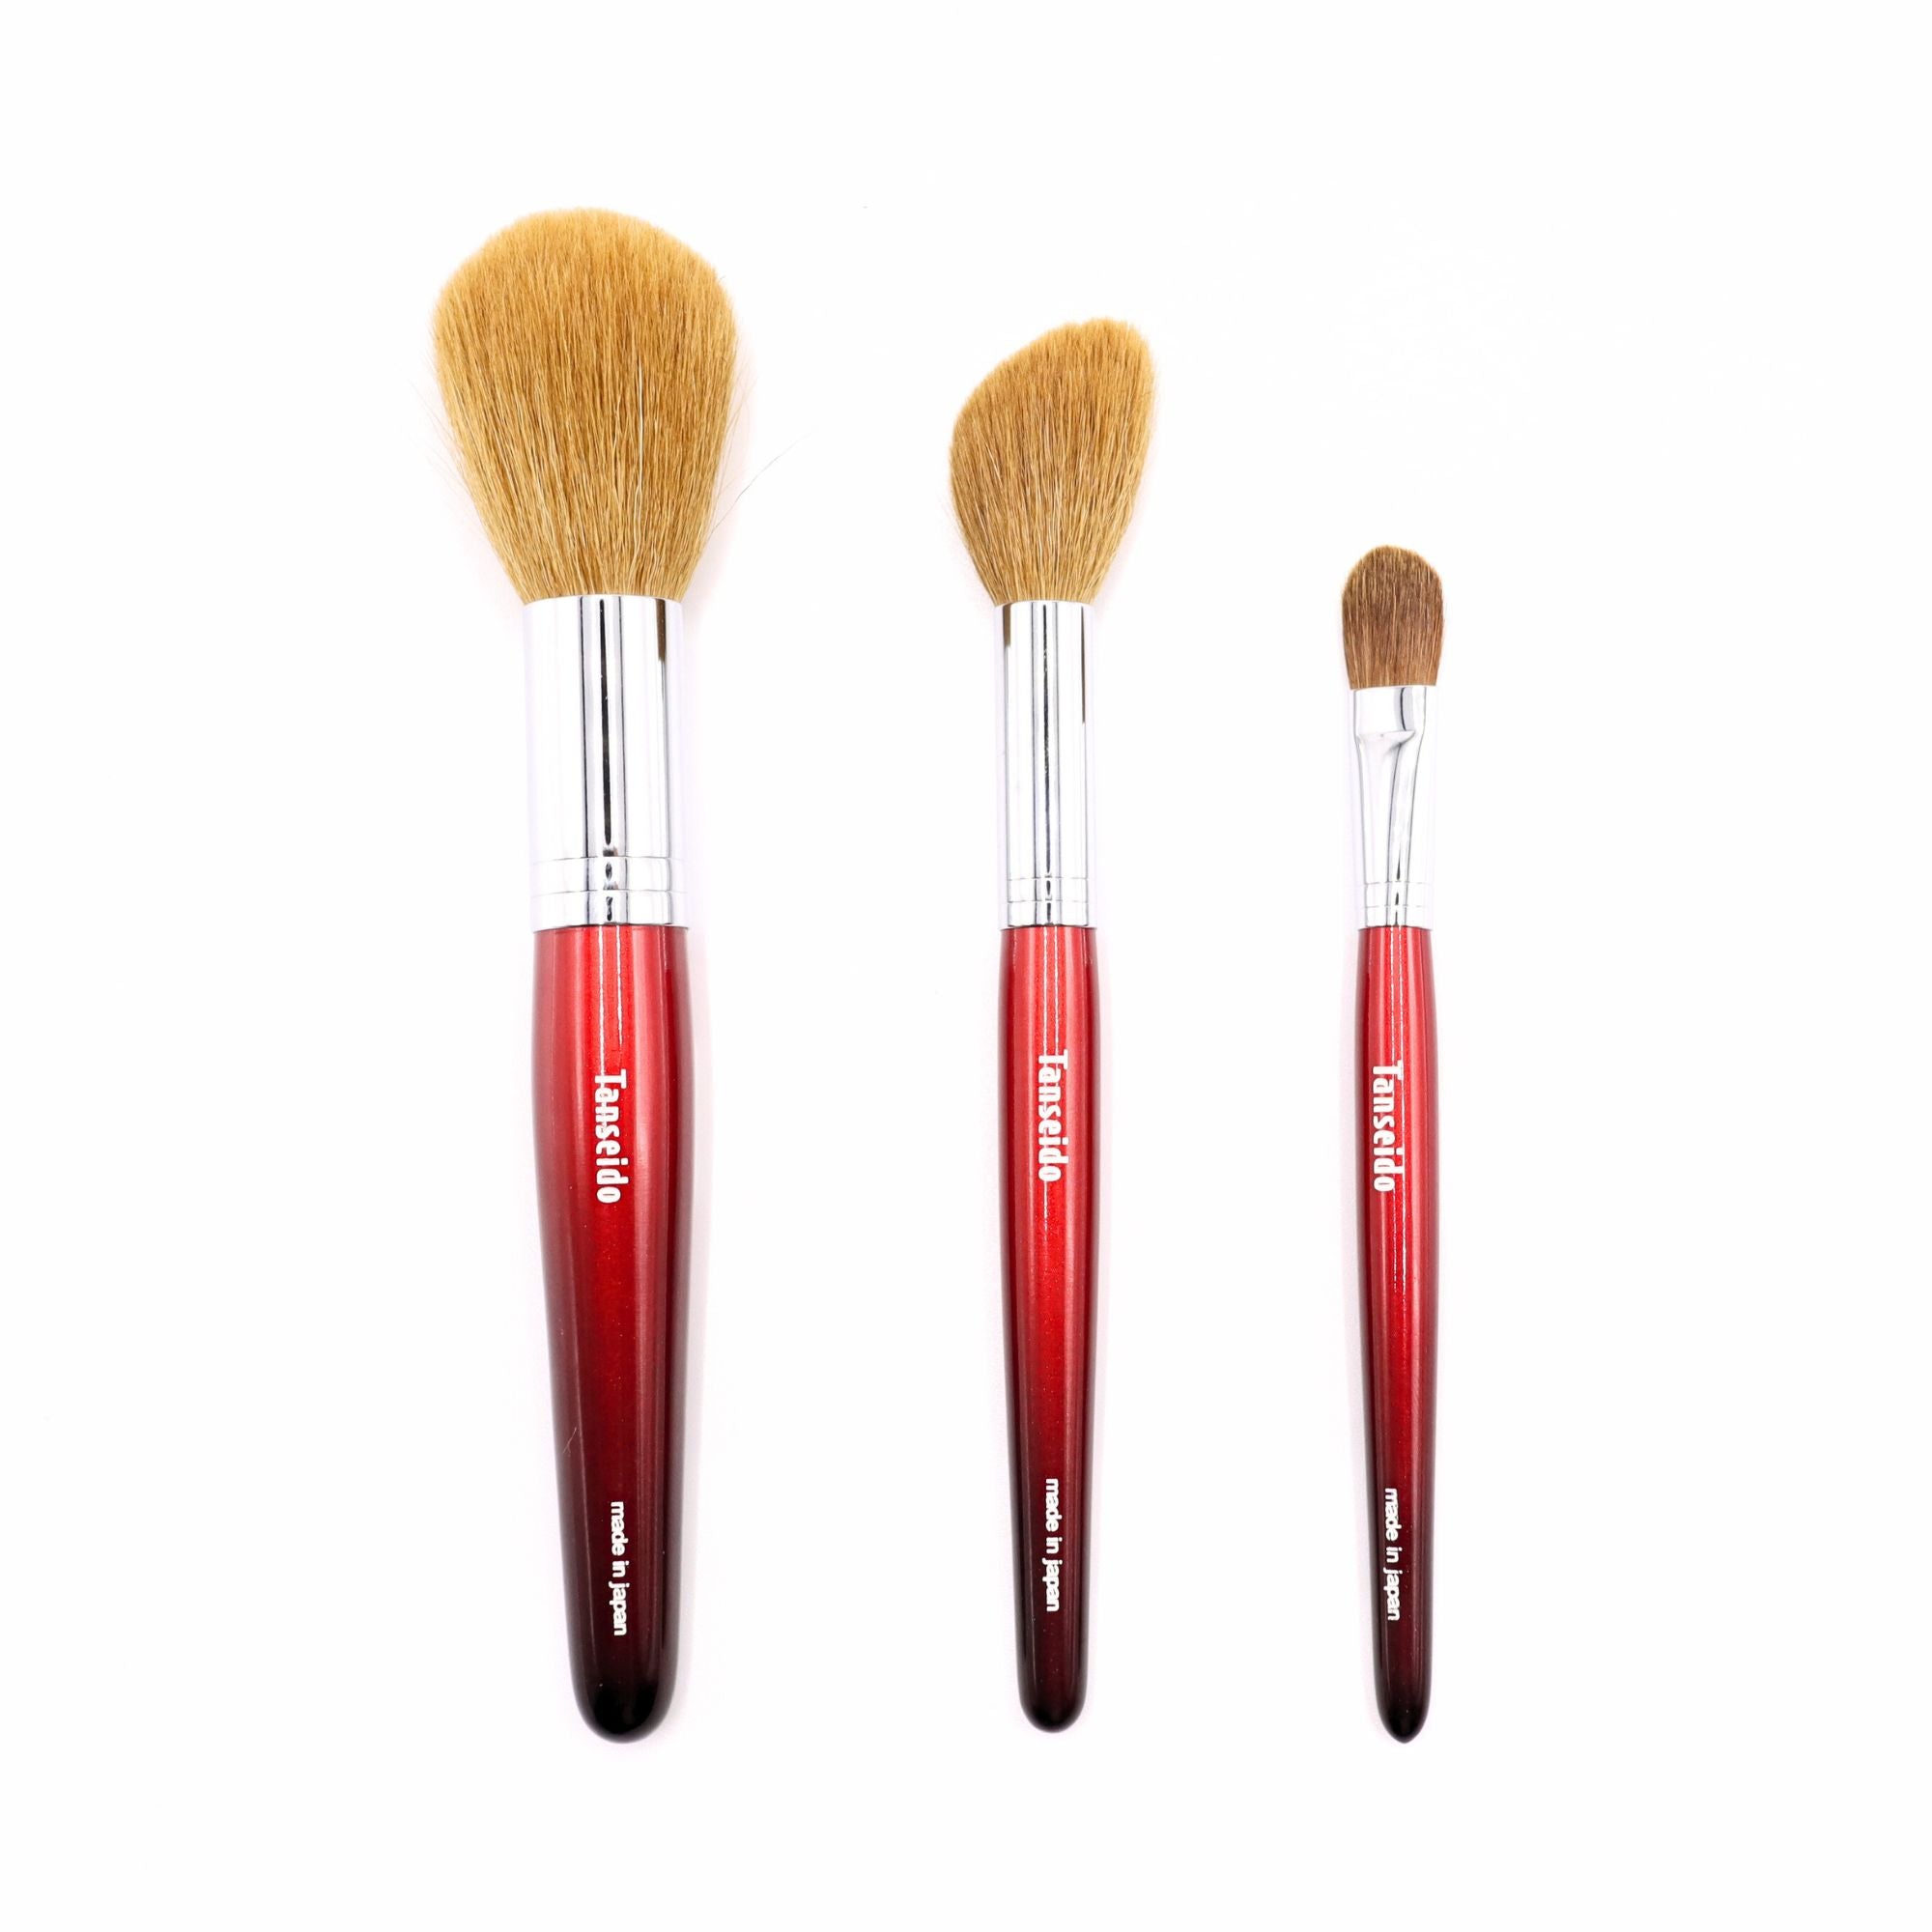 Tanseido AKA 赤 Series PQ10 Eyeshadow Brush (Regular Collection) - Fude Beauty, Japanese Makeup Brushes